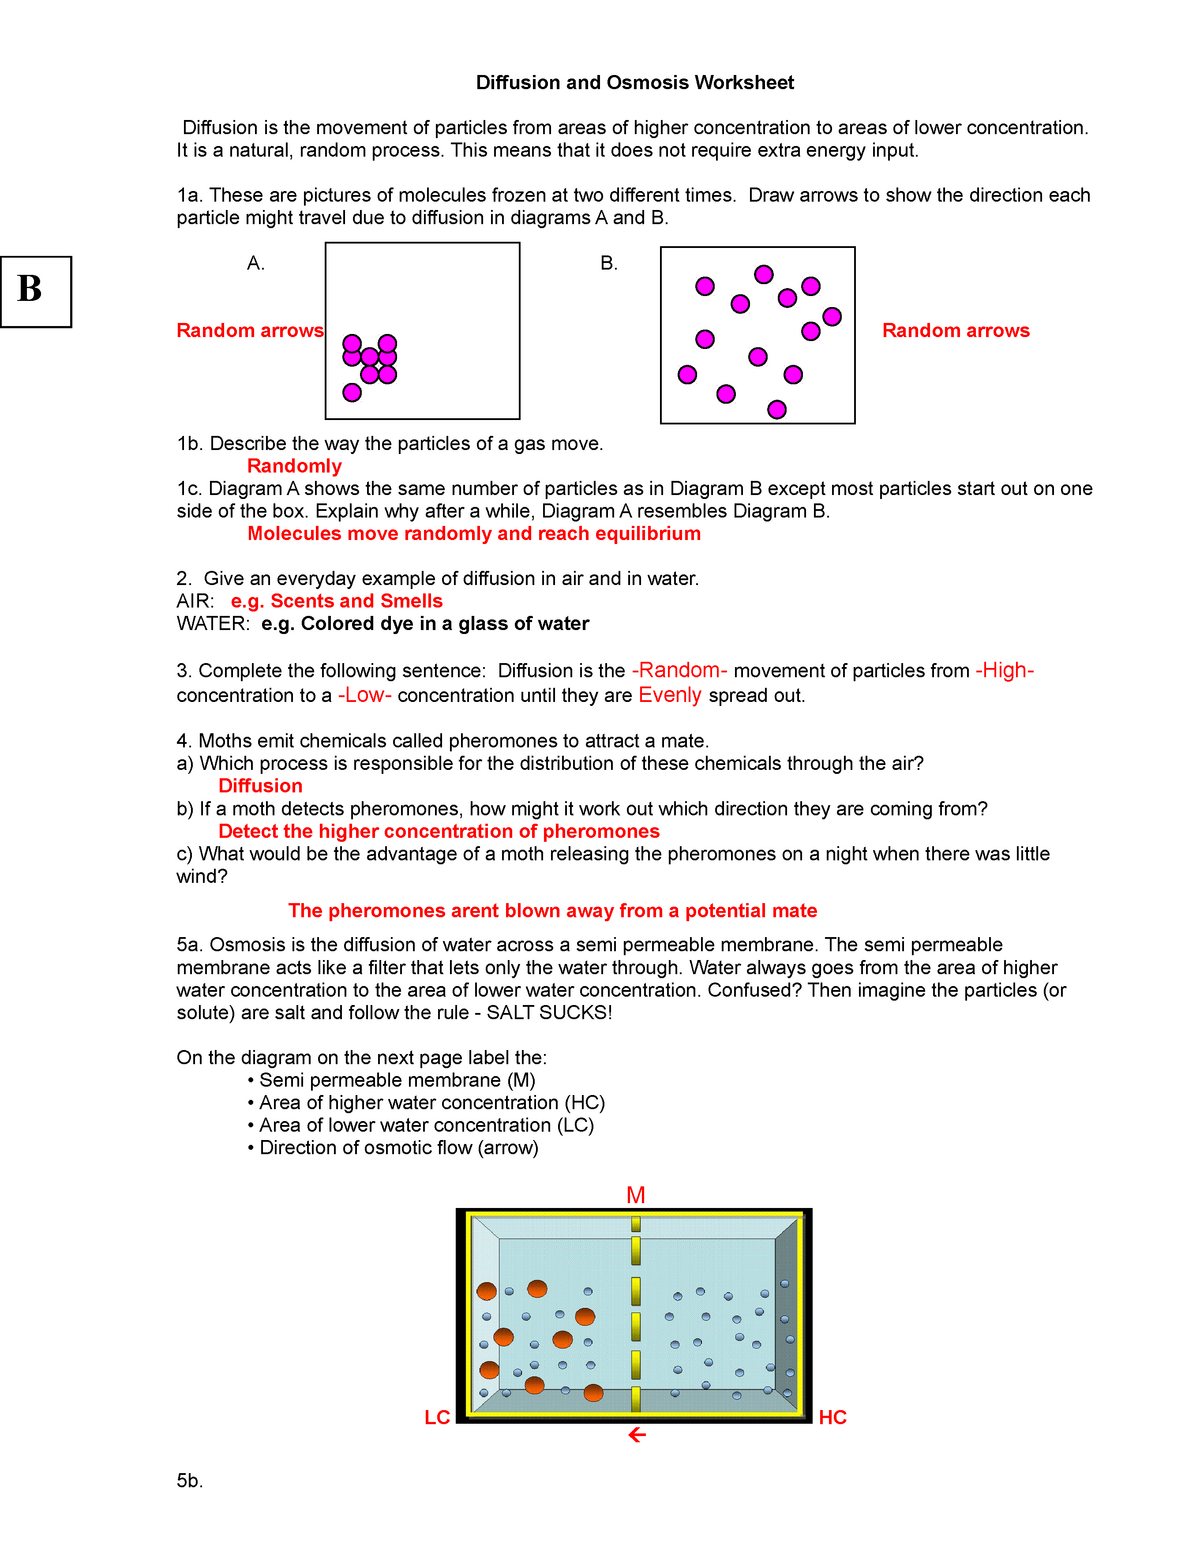 Diffusion and Osmosis Worksheet KEY 11 - StuDocu Inside Diffusion And Osmosis Worksheet